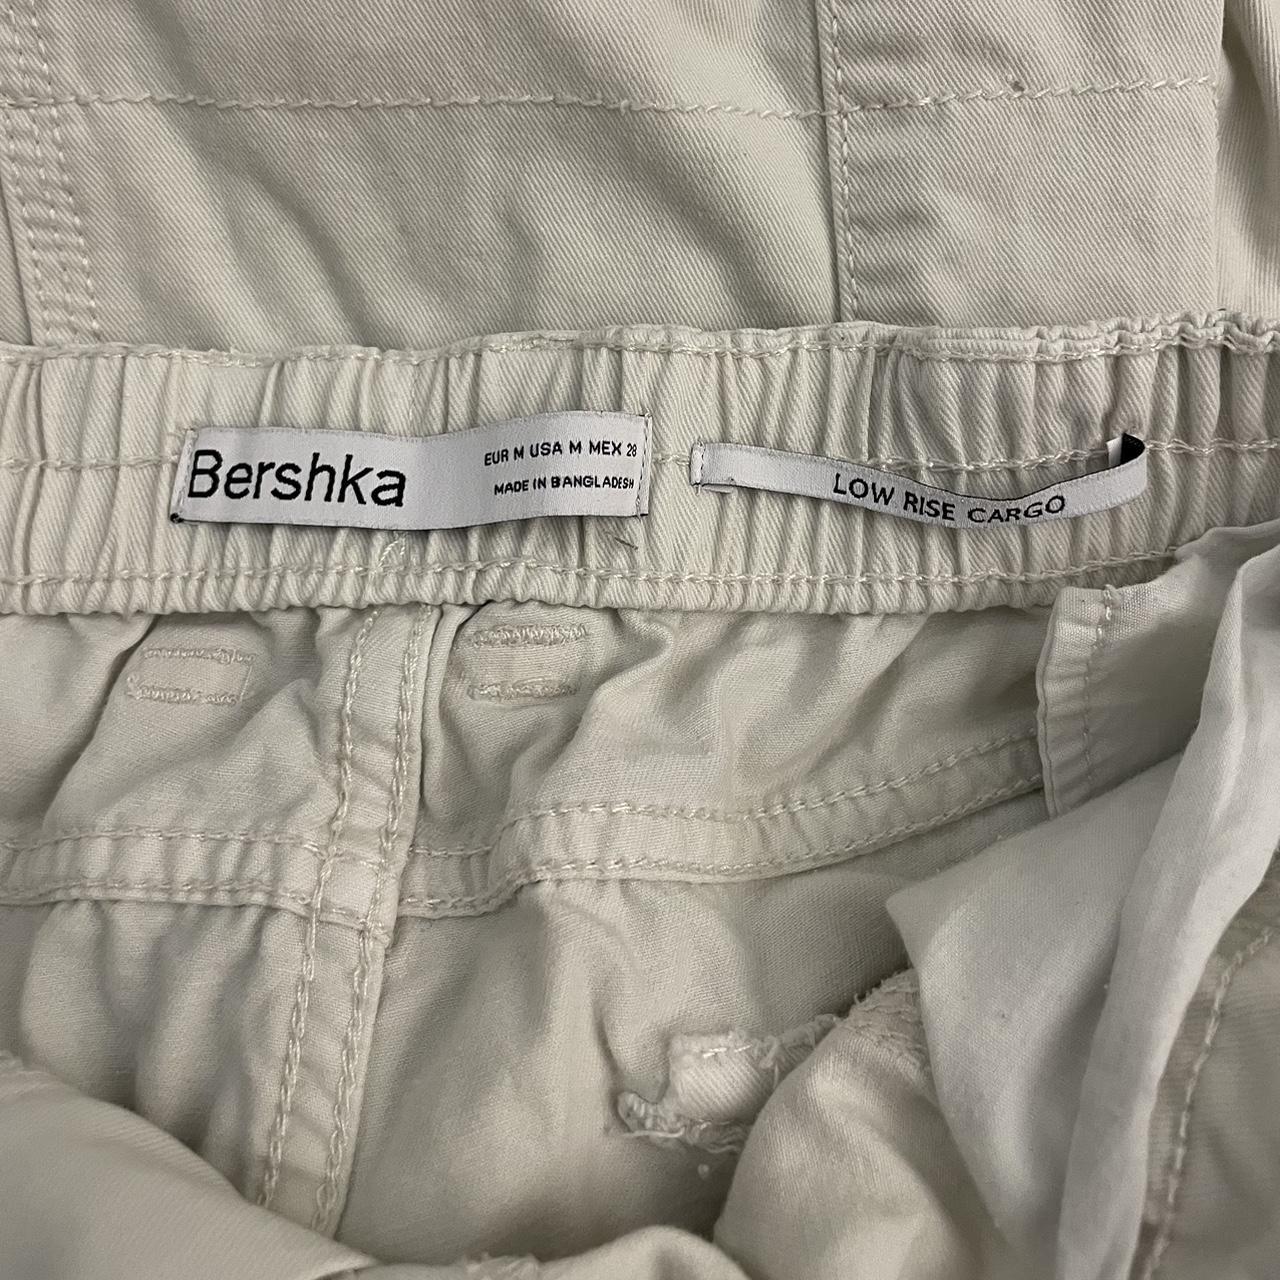 bershka low rise cargo pants #cargo - Depop